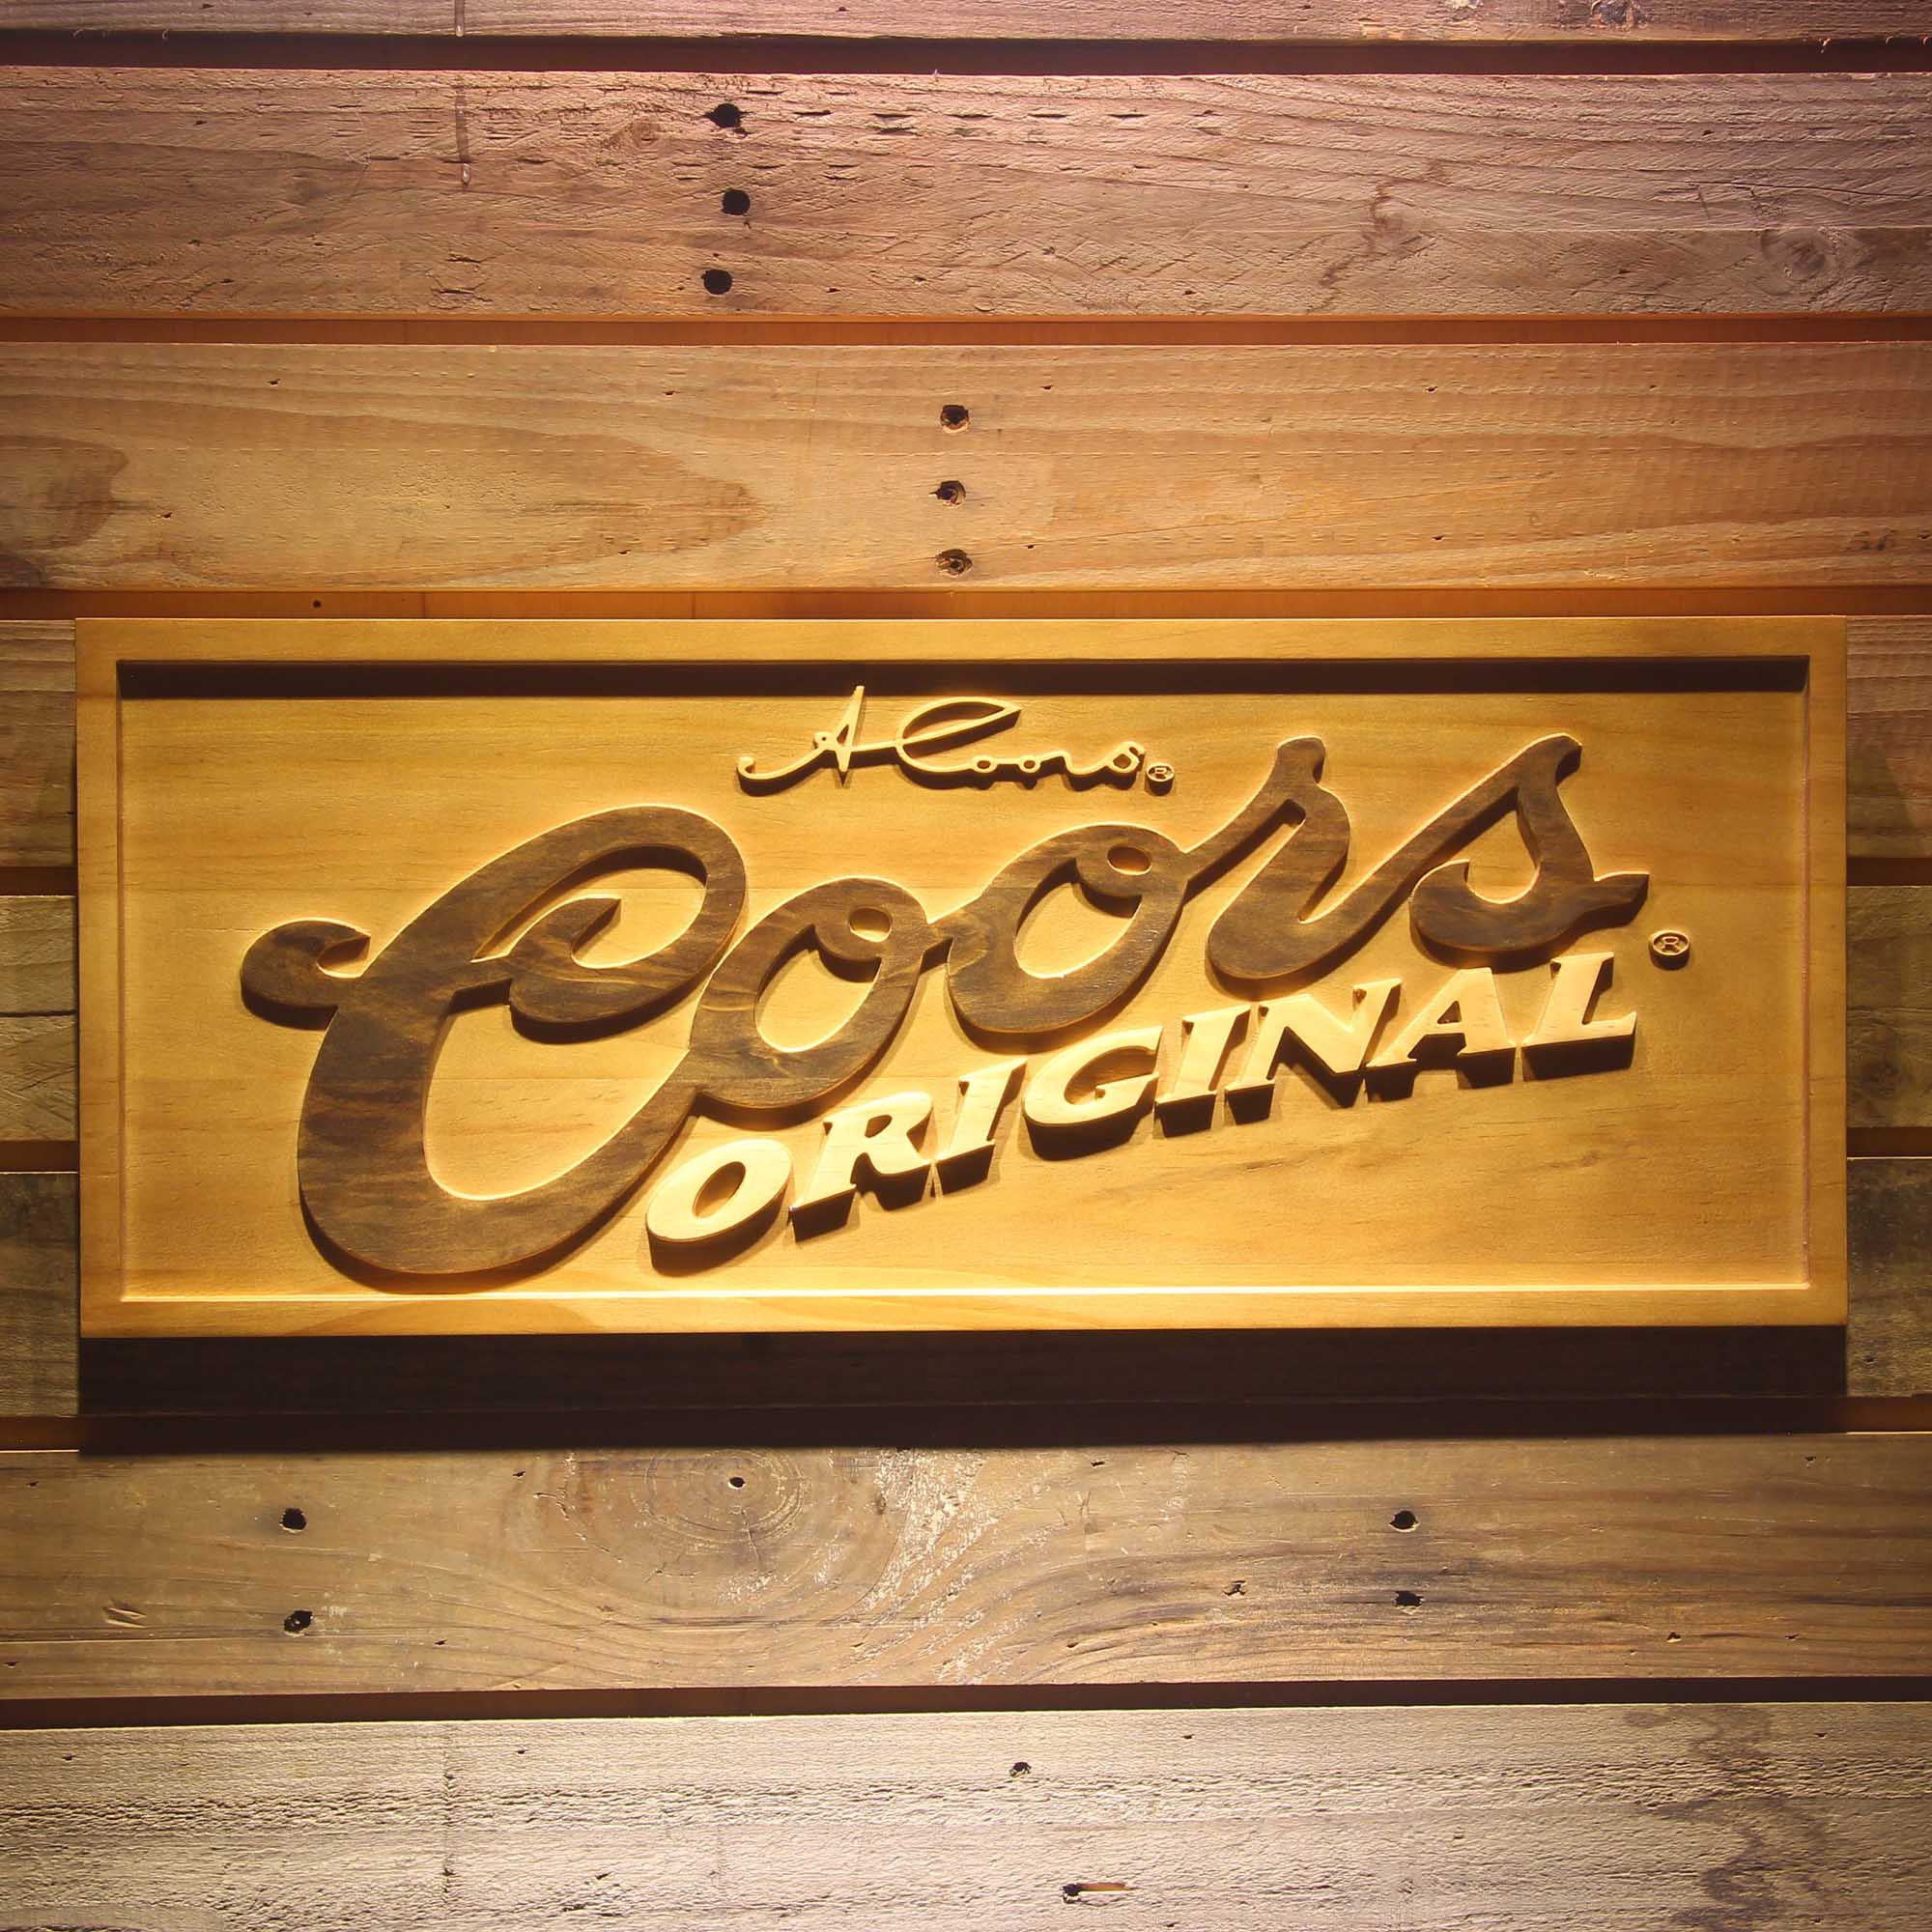 Coors,Coors Original 3D Solid Wooden Craving Sign